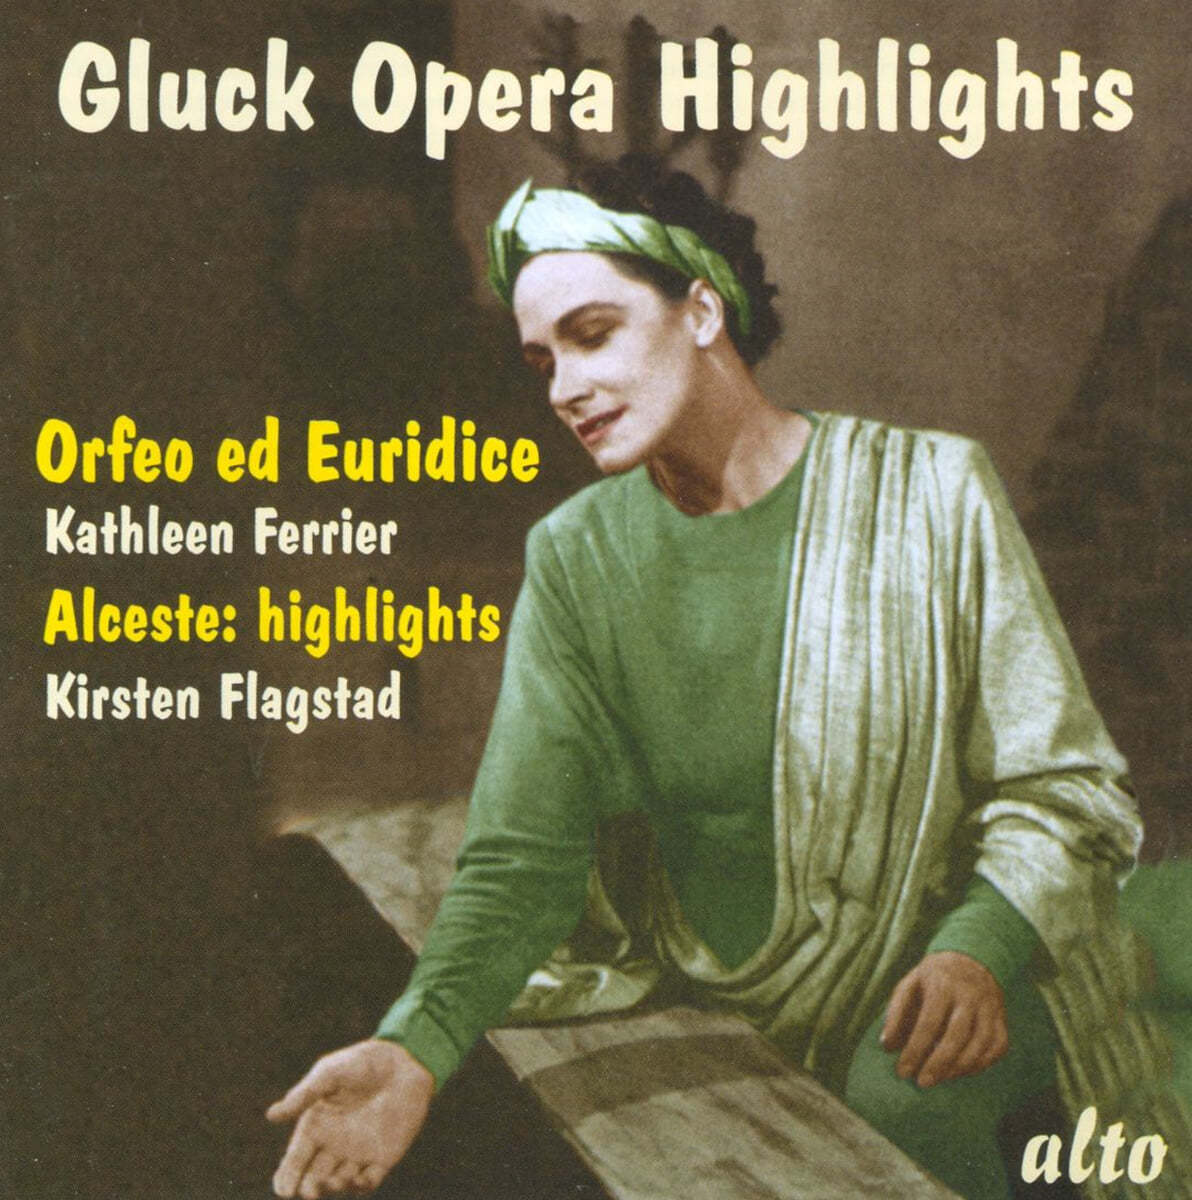 Kathleen Ferrier 글룩: 오페라 하이라이트 - 오르페오와 에우리디케 (Gluck Opera Highlights)